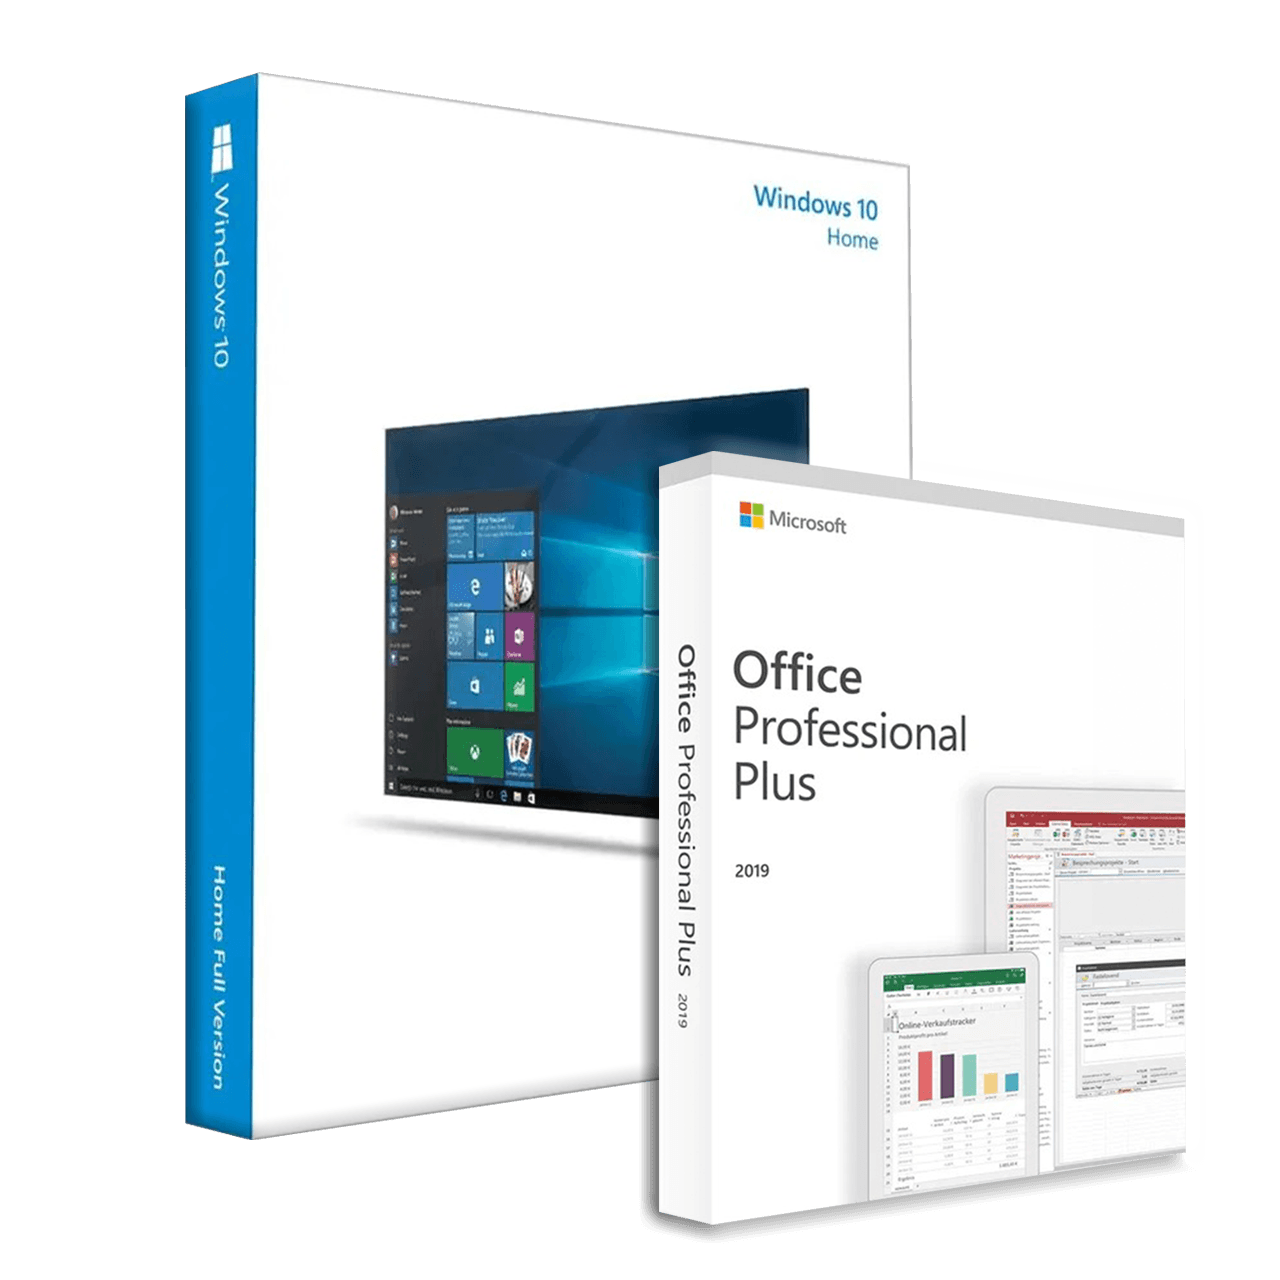 Microsoft Windows 10 Home + Microsoft Office 2019 Professional Plus Bundle